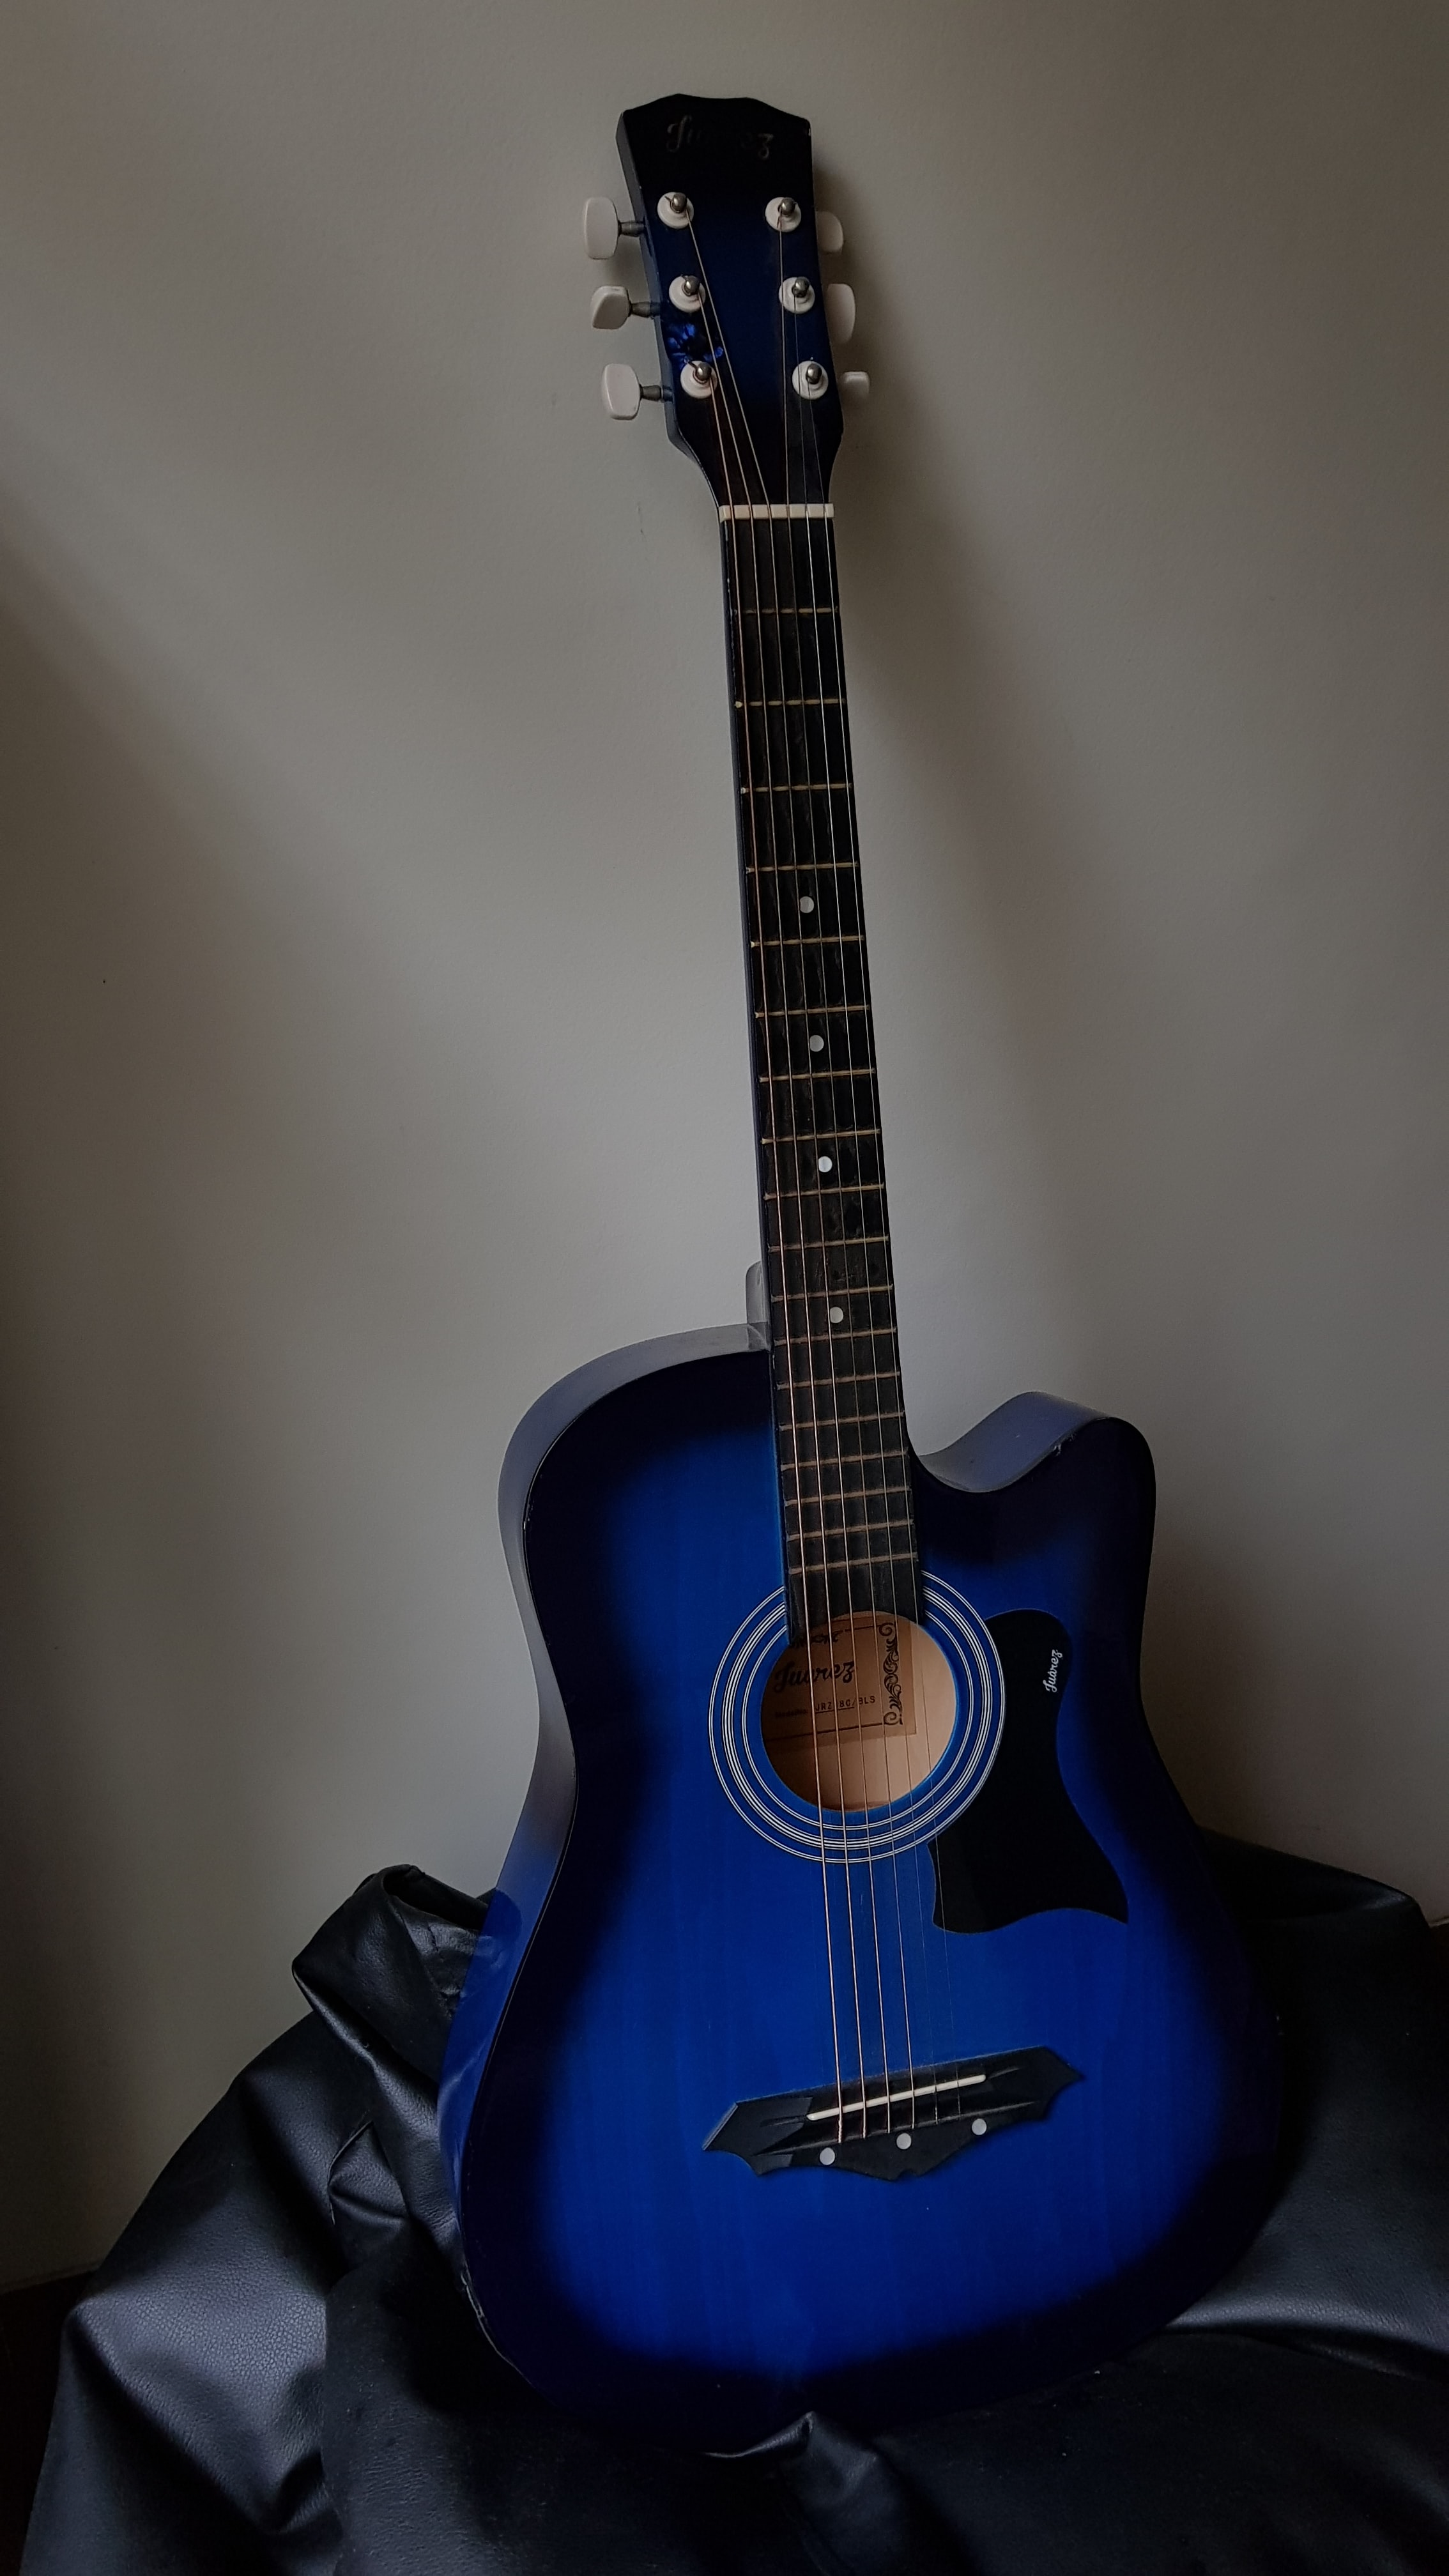 56731 descargar imagen instrumento musical, música, azul, guitarra: fondos de pantalla y protectores de pantalla gratis